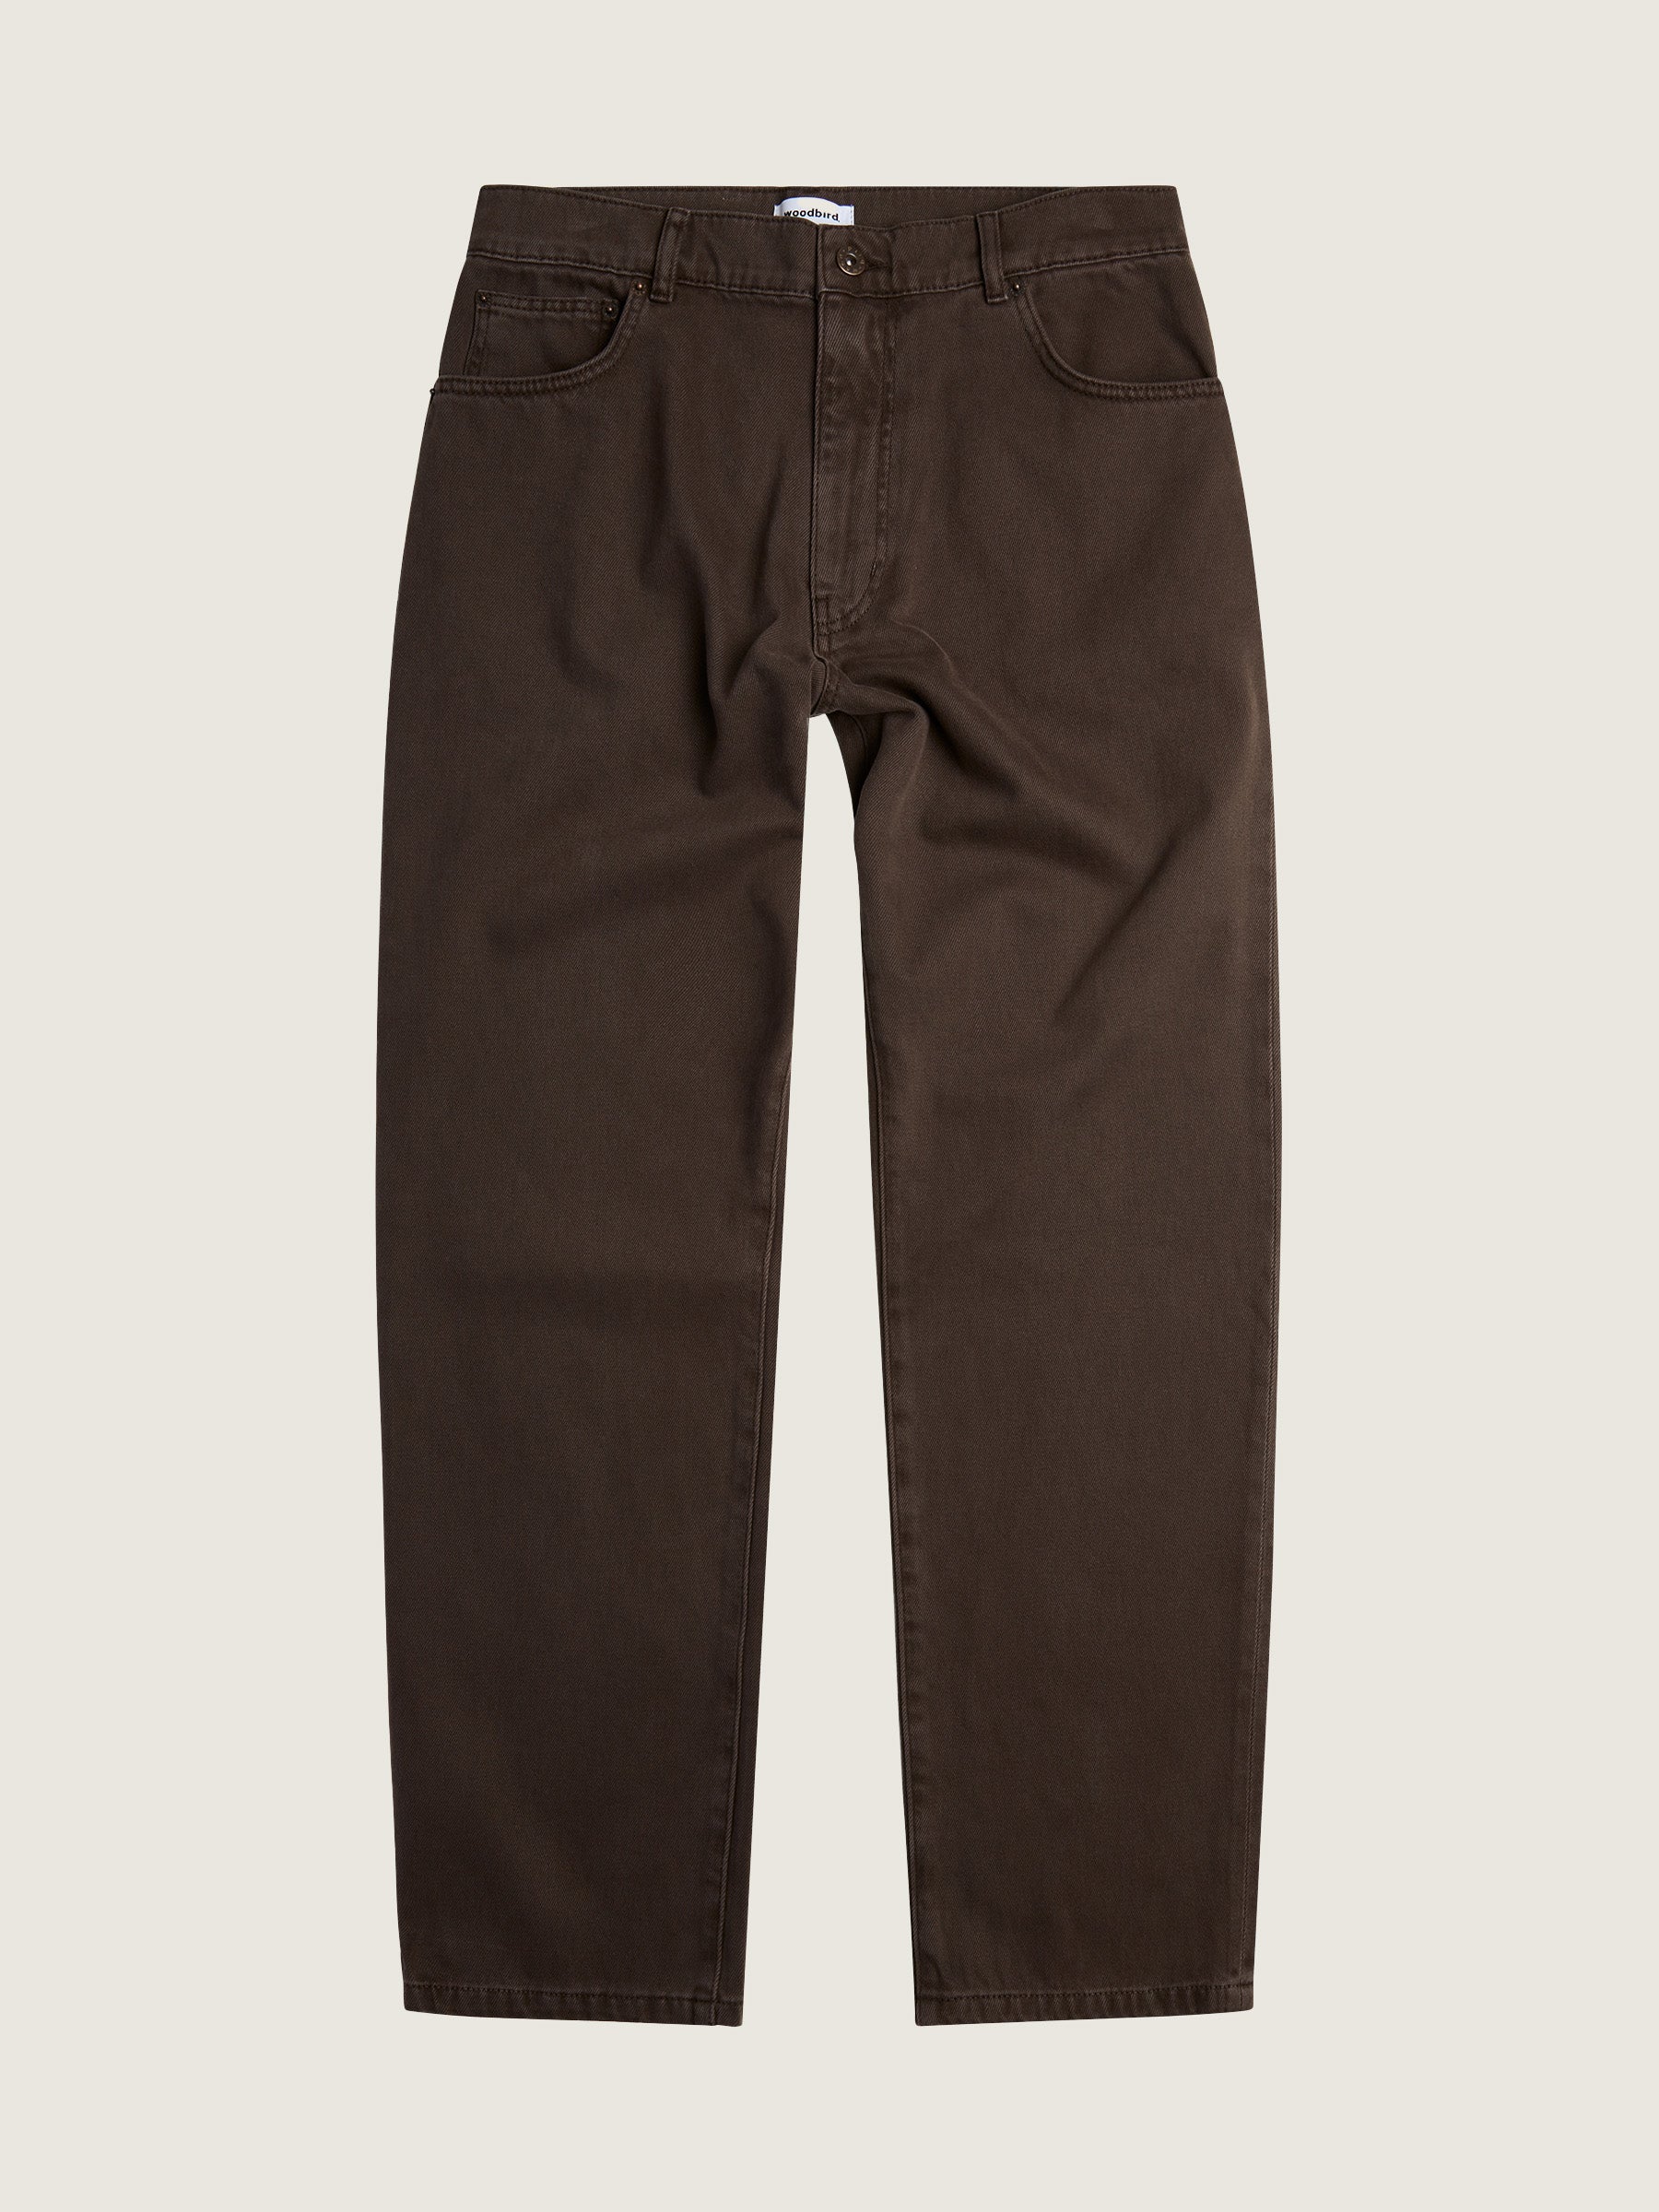 Woodbird Leroy Twill Pants Jeans Brown